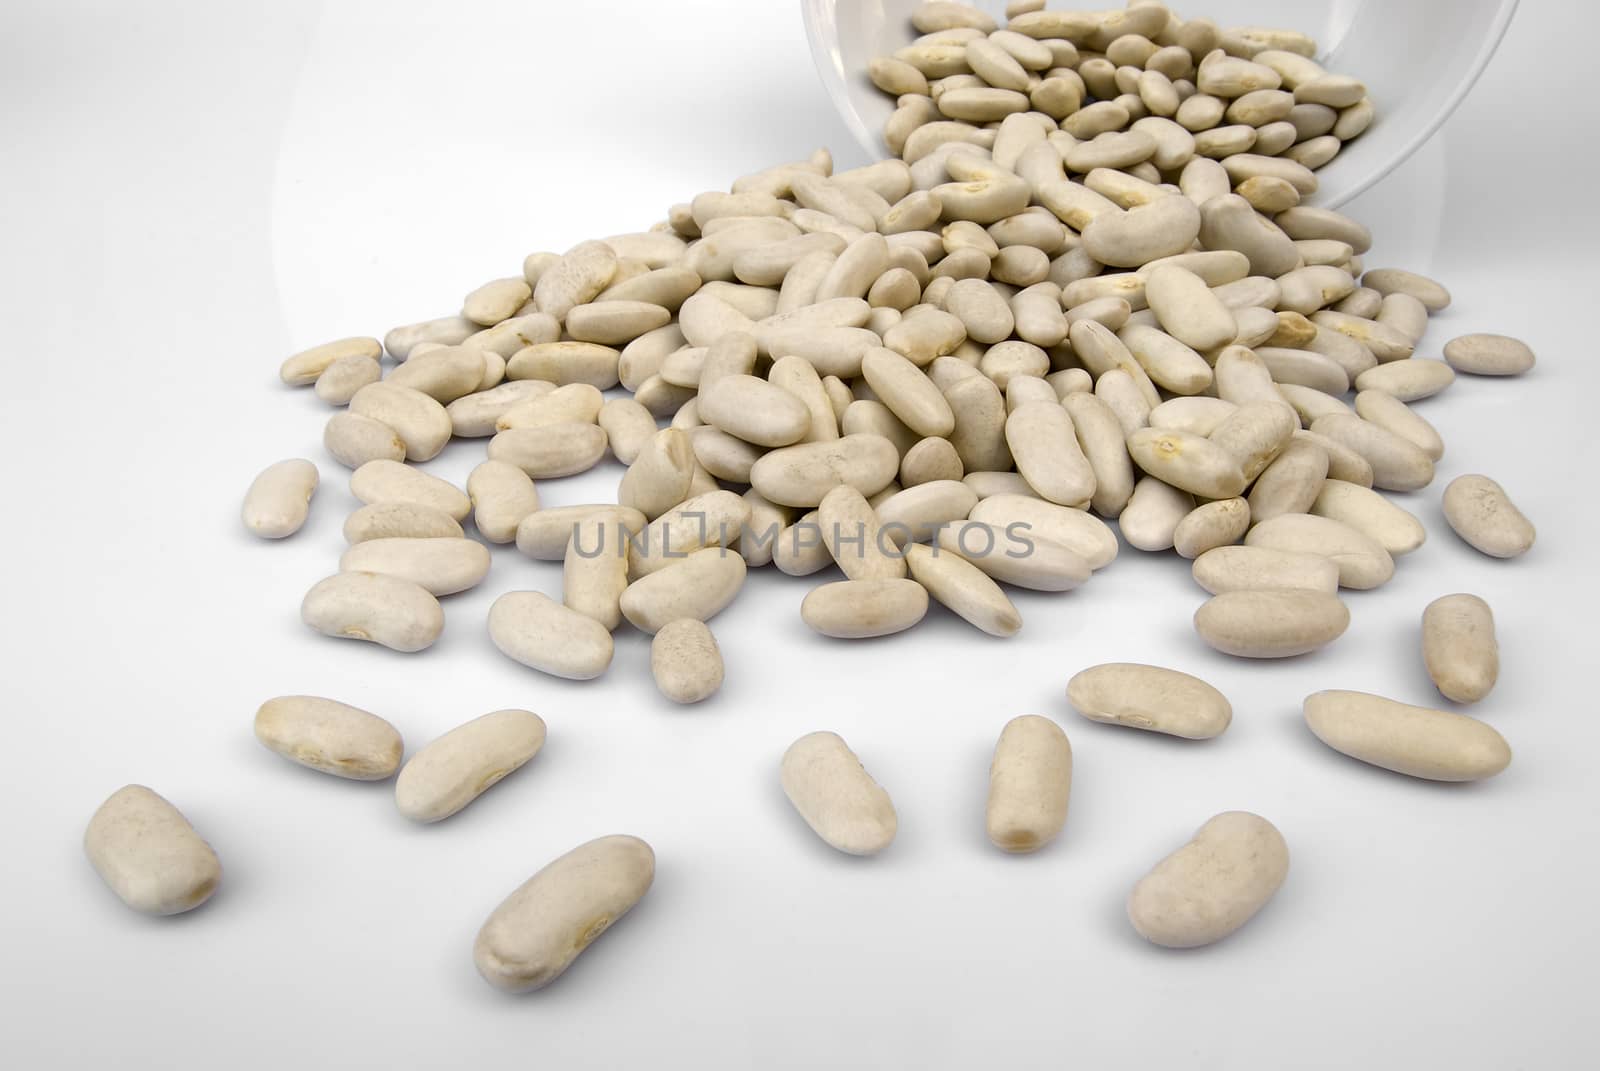 white Beans on white background